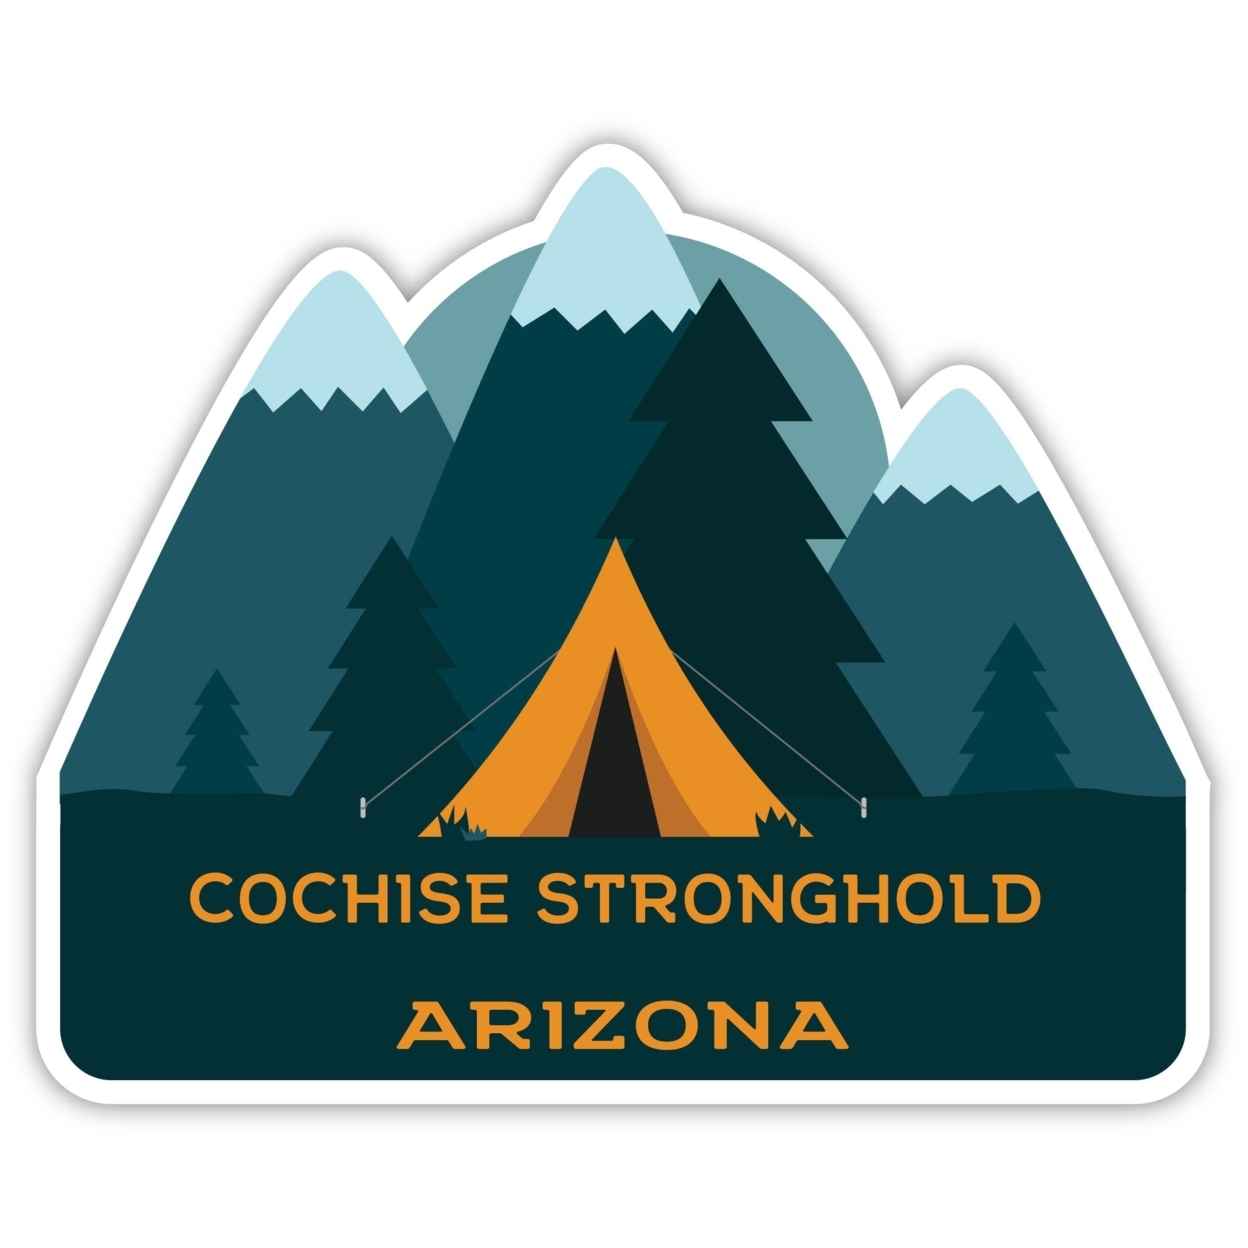 Cochise Stronghold Arizona Souvenir Decorative Stickers (Choose Theme And Size) - Single Unit, 12-Inch, Tent